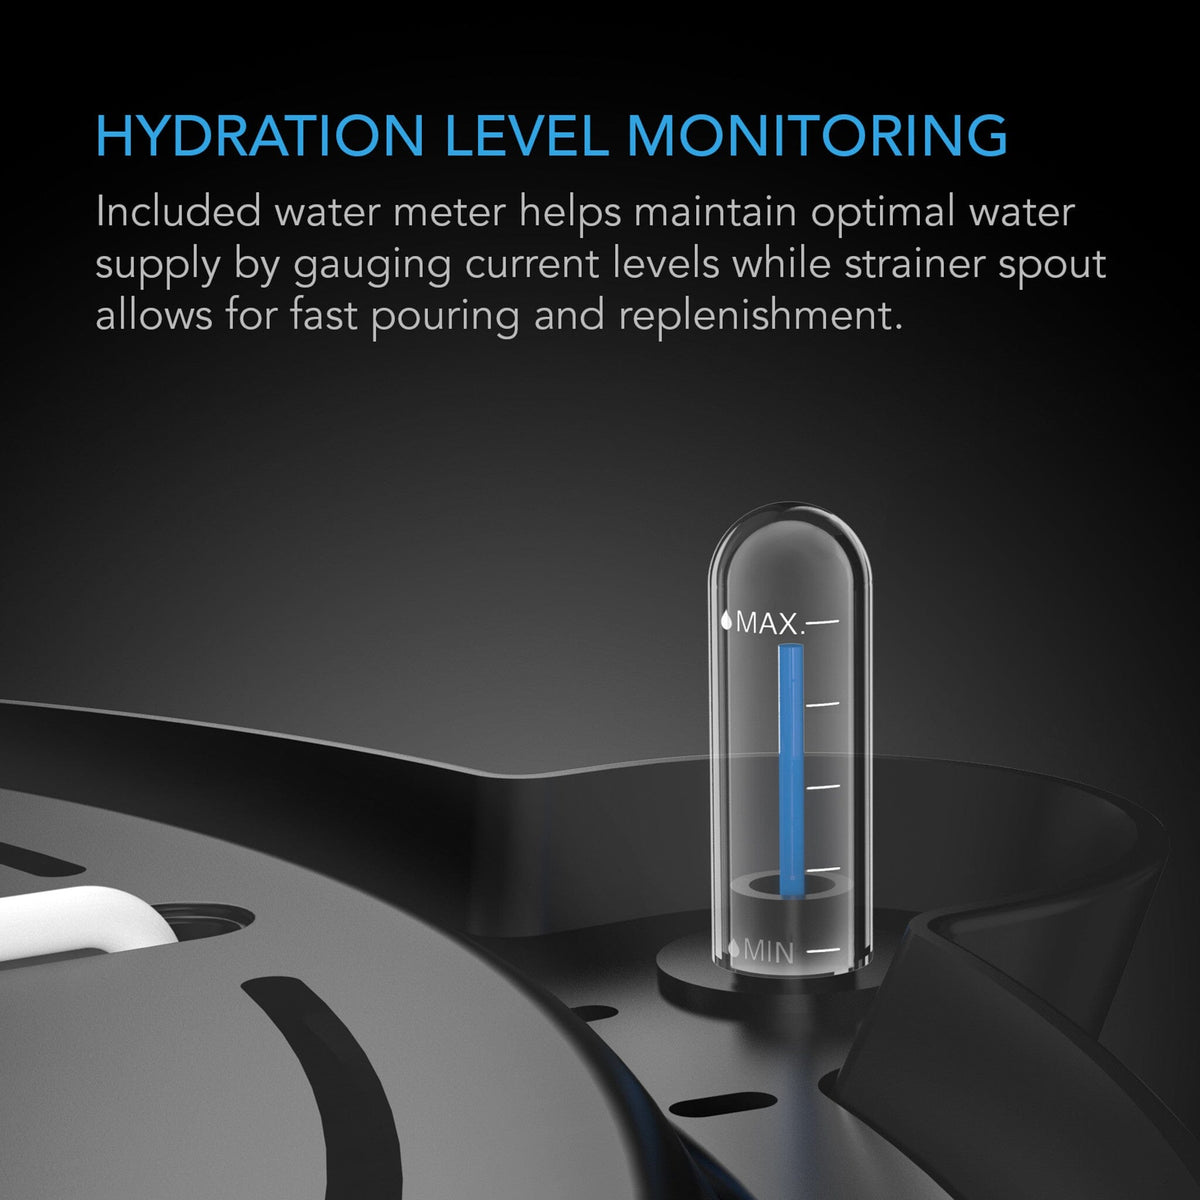 Hydration level monitoring